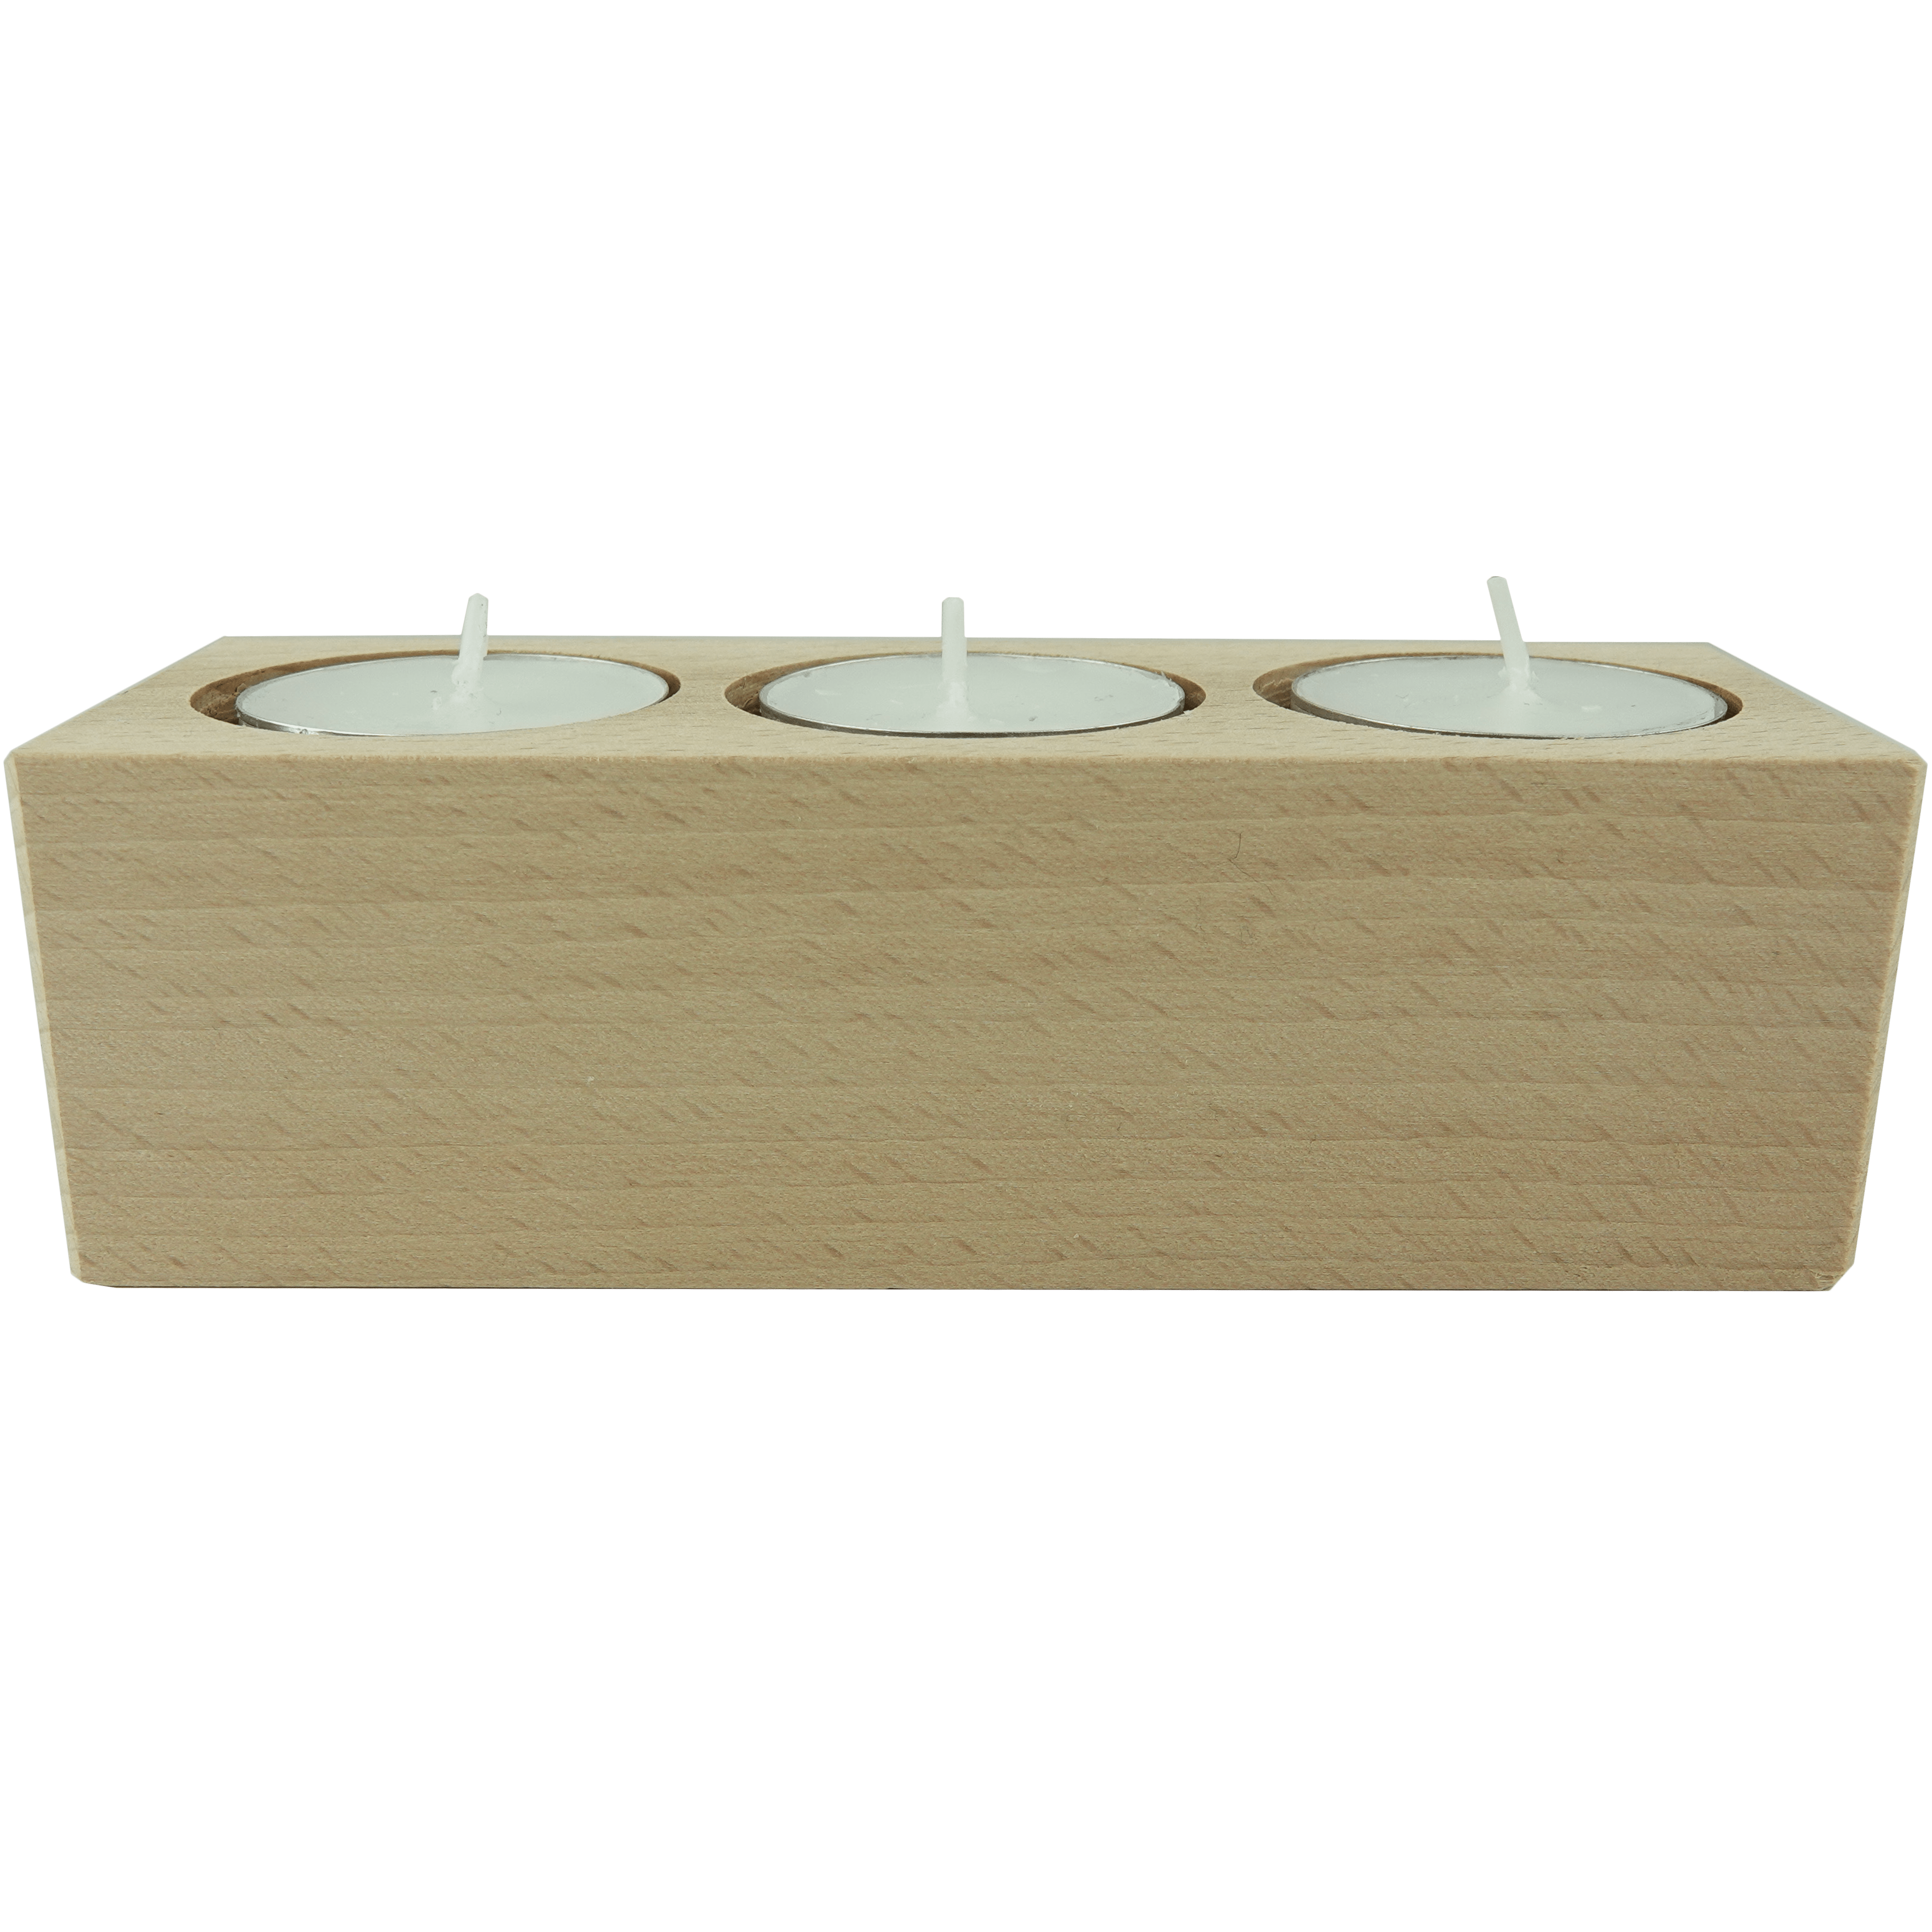 houten-waxinelichthouder-met-3-lichtjes